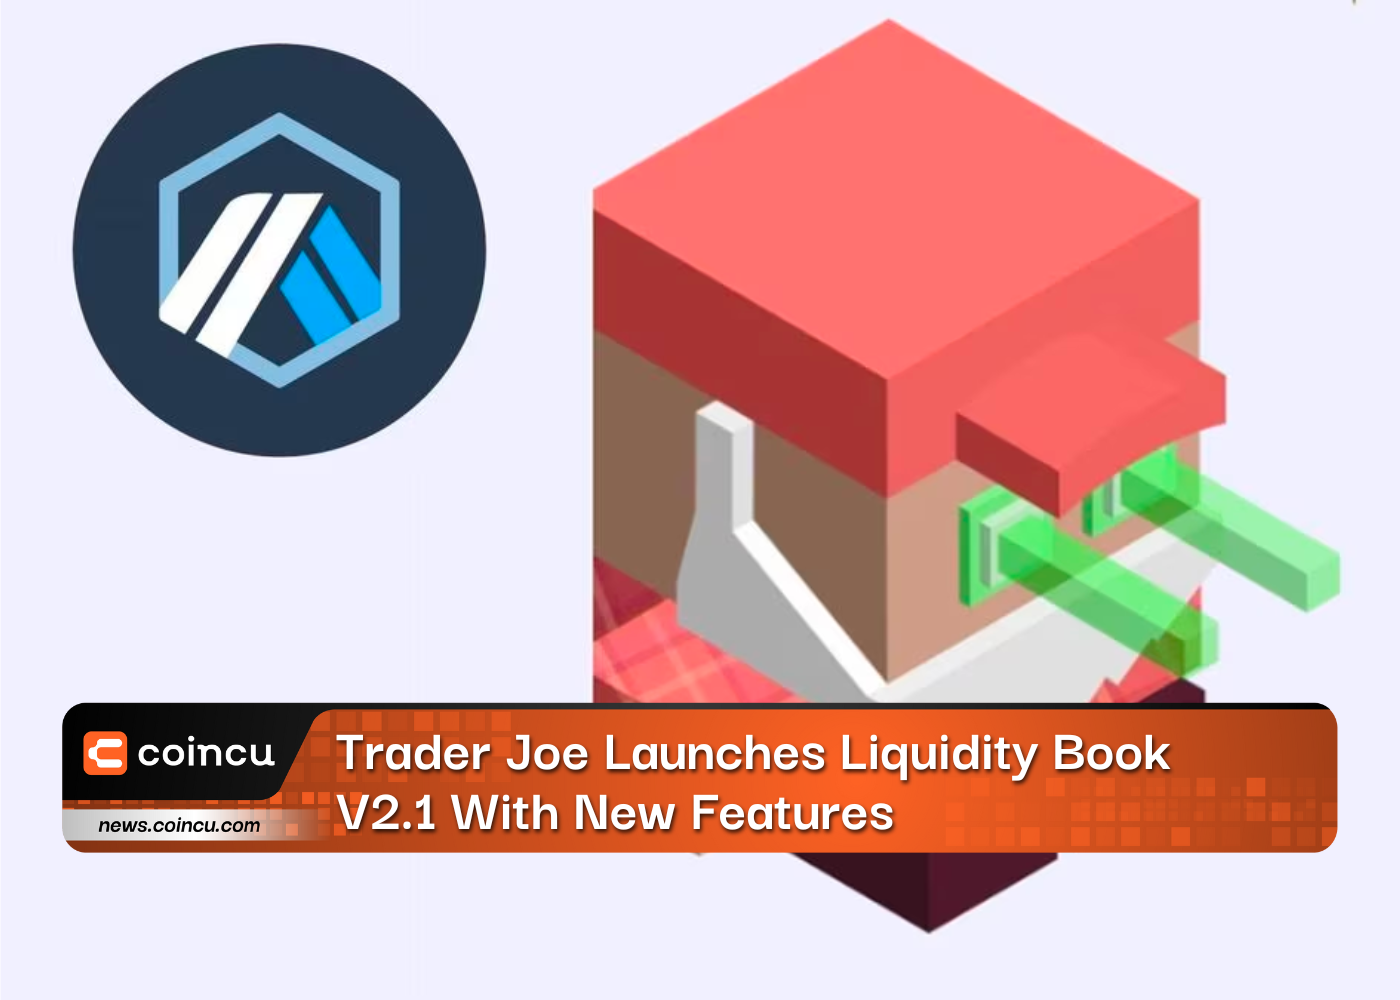 Trader Joe lance Liquidity Book V2.1 avec de nouvelles fonctionnalités